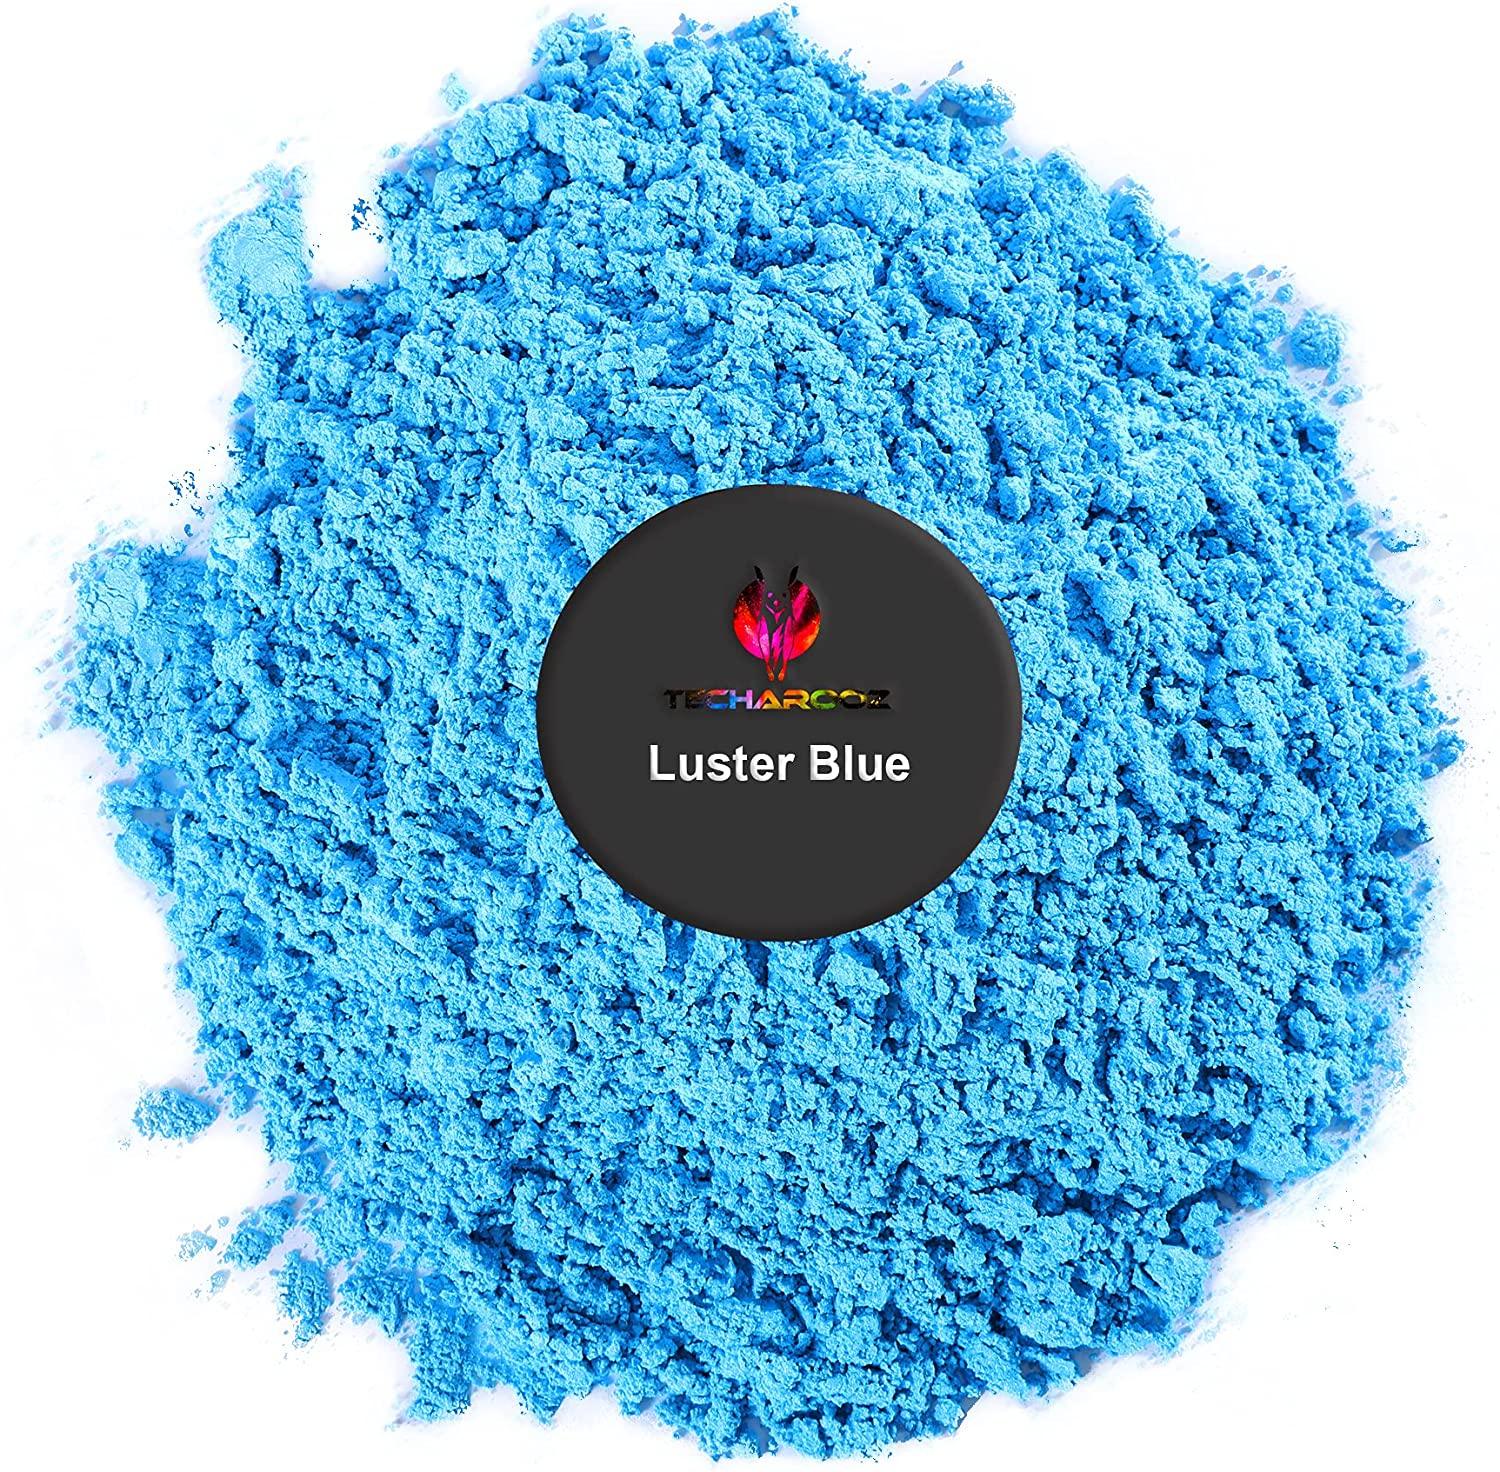 TECHAROOZ Chameleon Mica Powder 8 Color Shift Mica Powder, Holographic  Glitter for UV & Epoxy Resin Supplies, Eyeshadow, Acrylic Paint, Nail  Decor